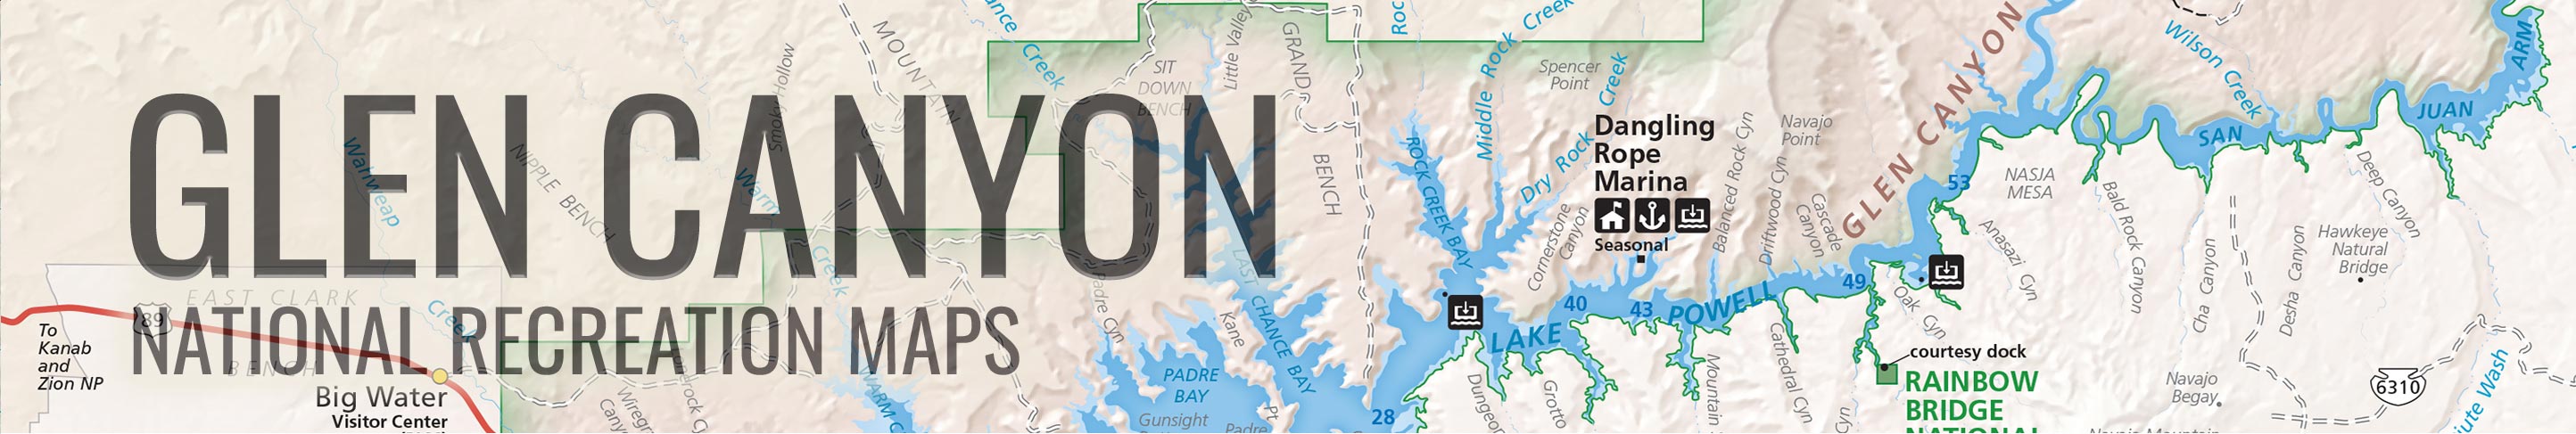 glen-canyon-national-recreation-area-maps-header